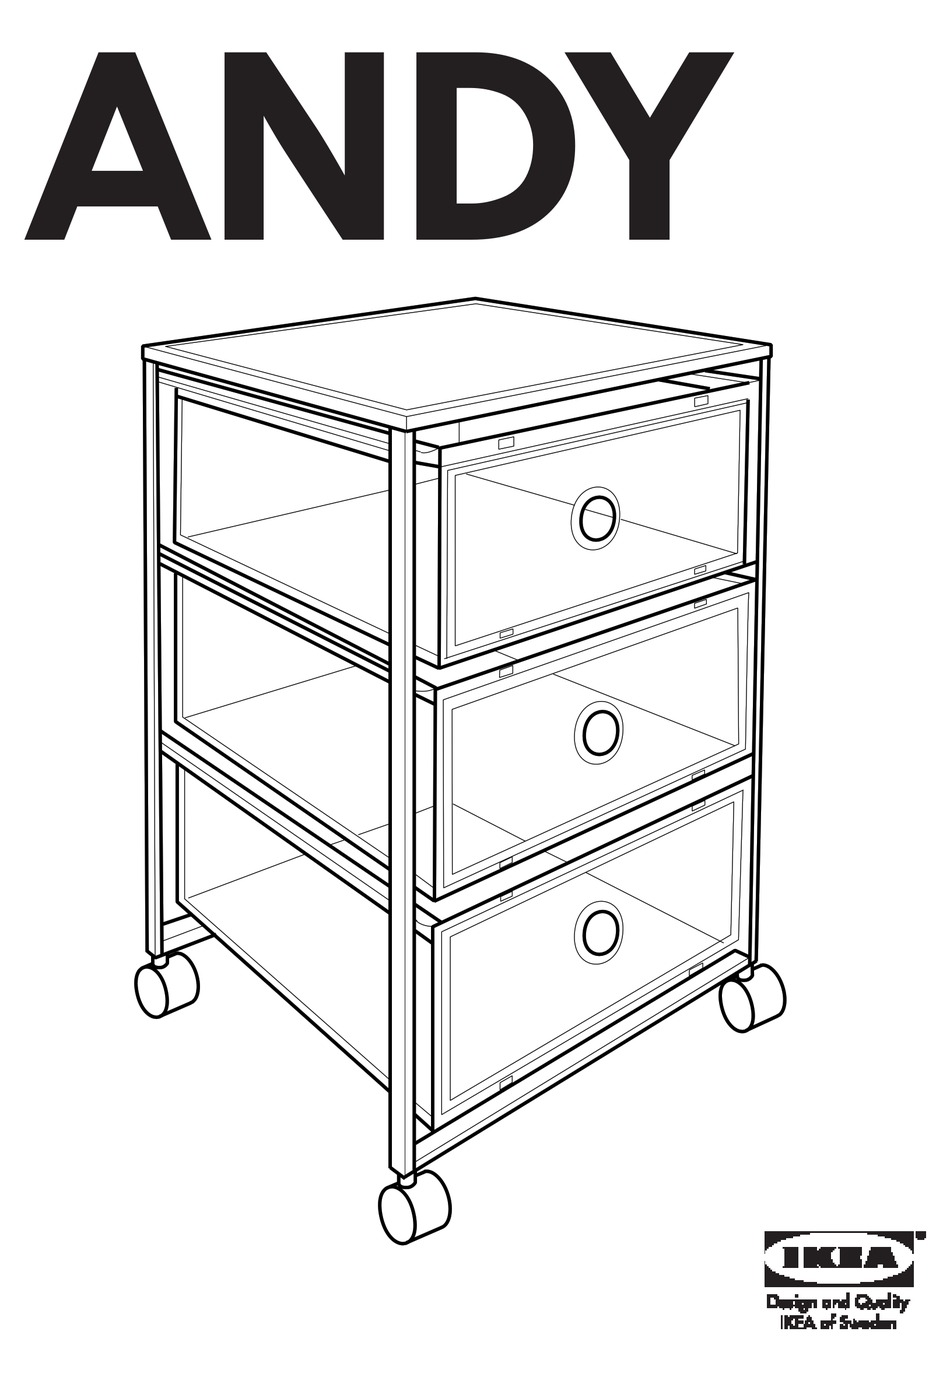 Middel deuropening Danser IKEA ANDY DRAWER UNIT W/CASTERS 15X23" INSTRUCTIONS MANUAL Pdf Download |  ManualsLib